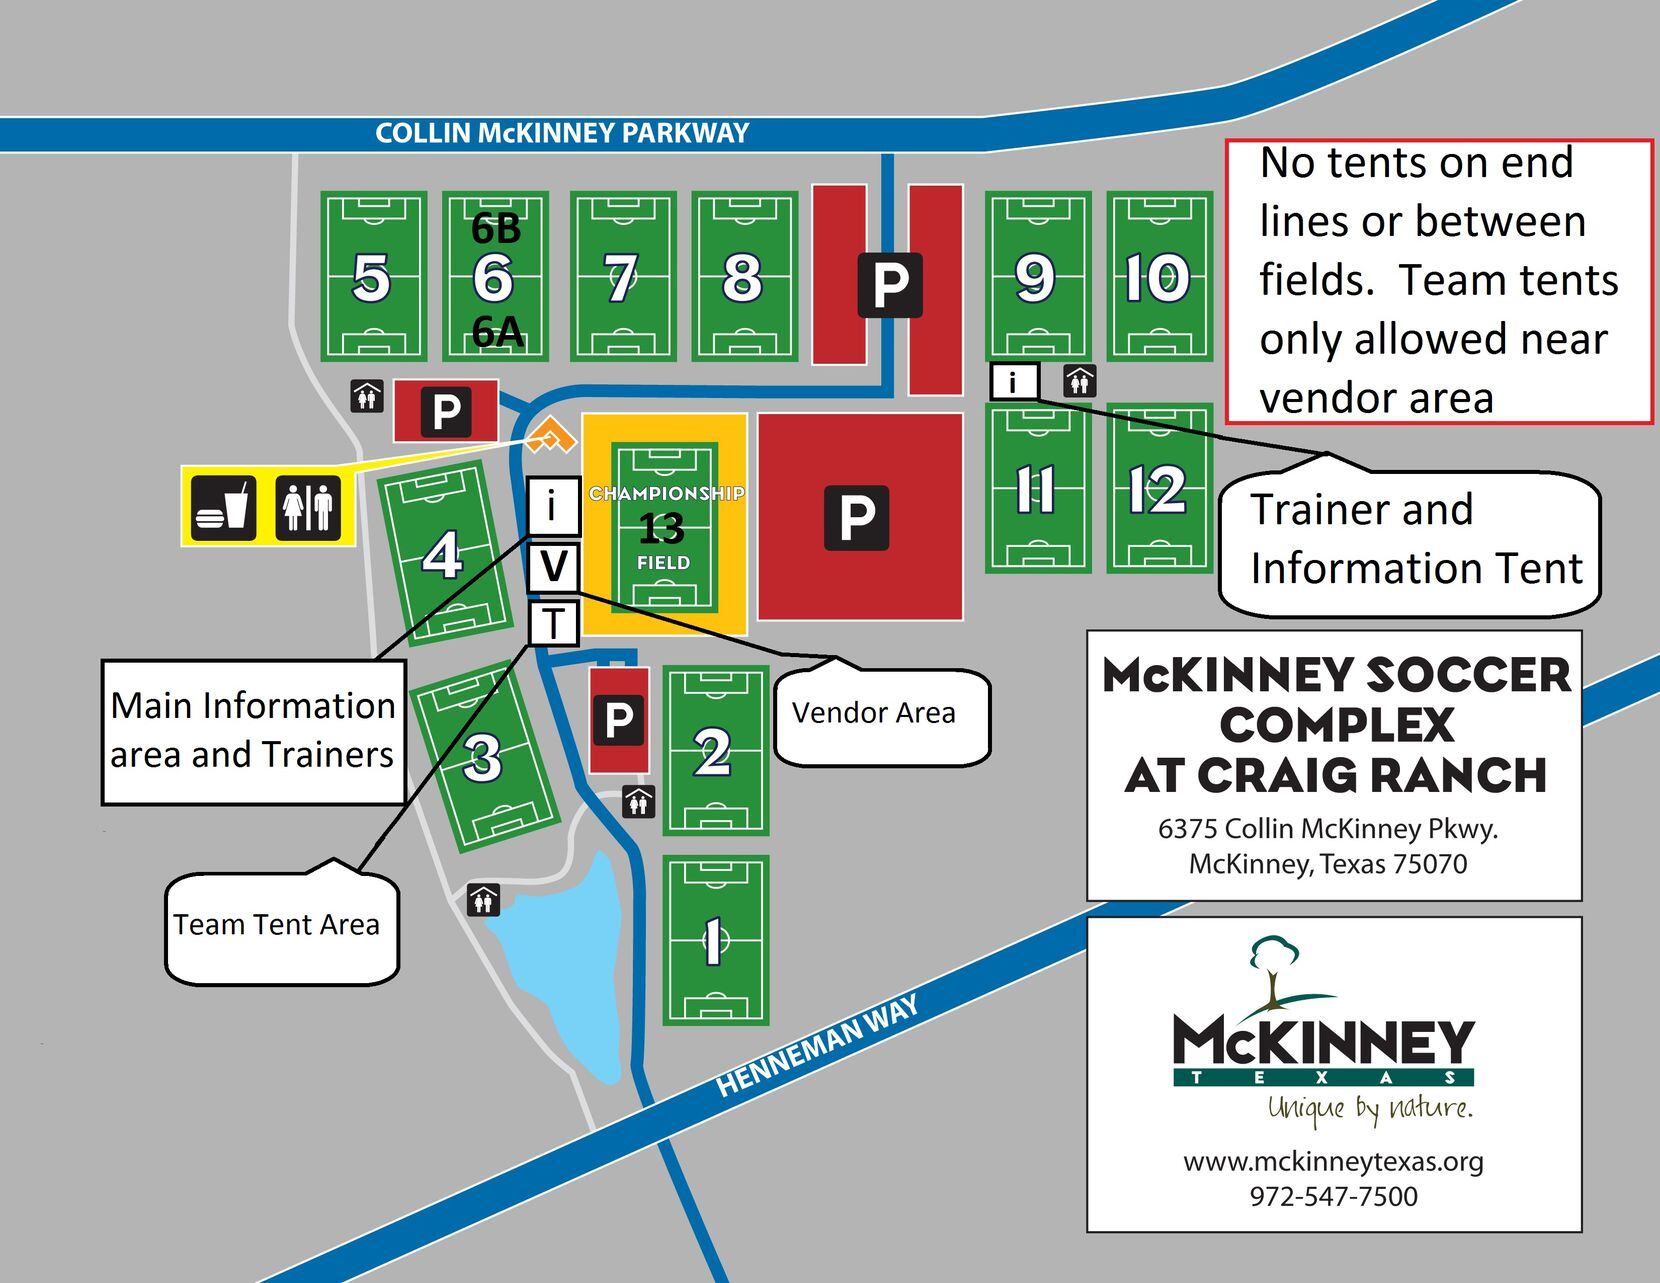 McKinney Soccer Complex at Craig Ranch